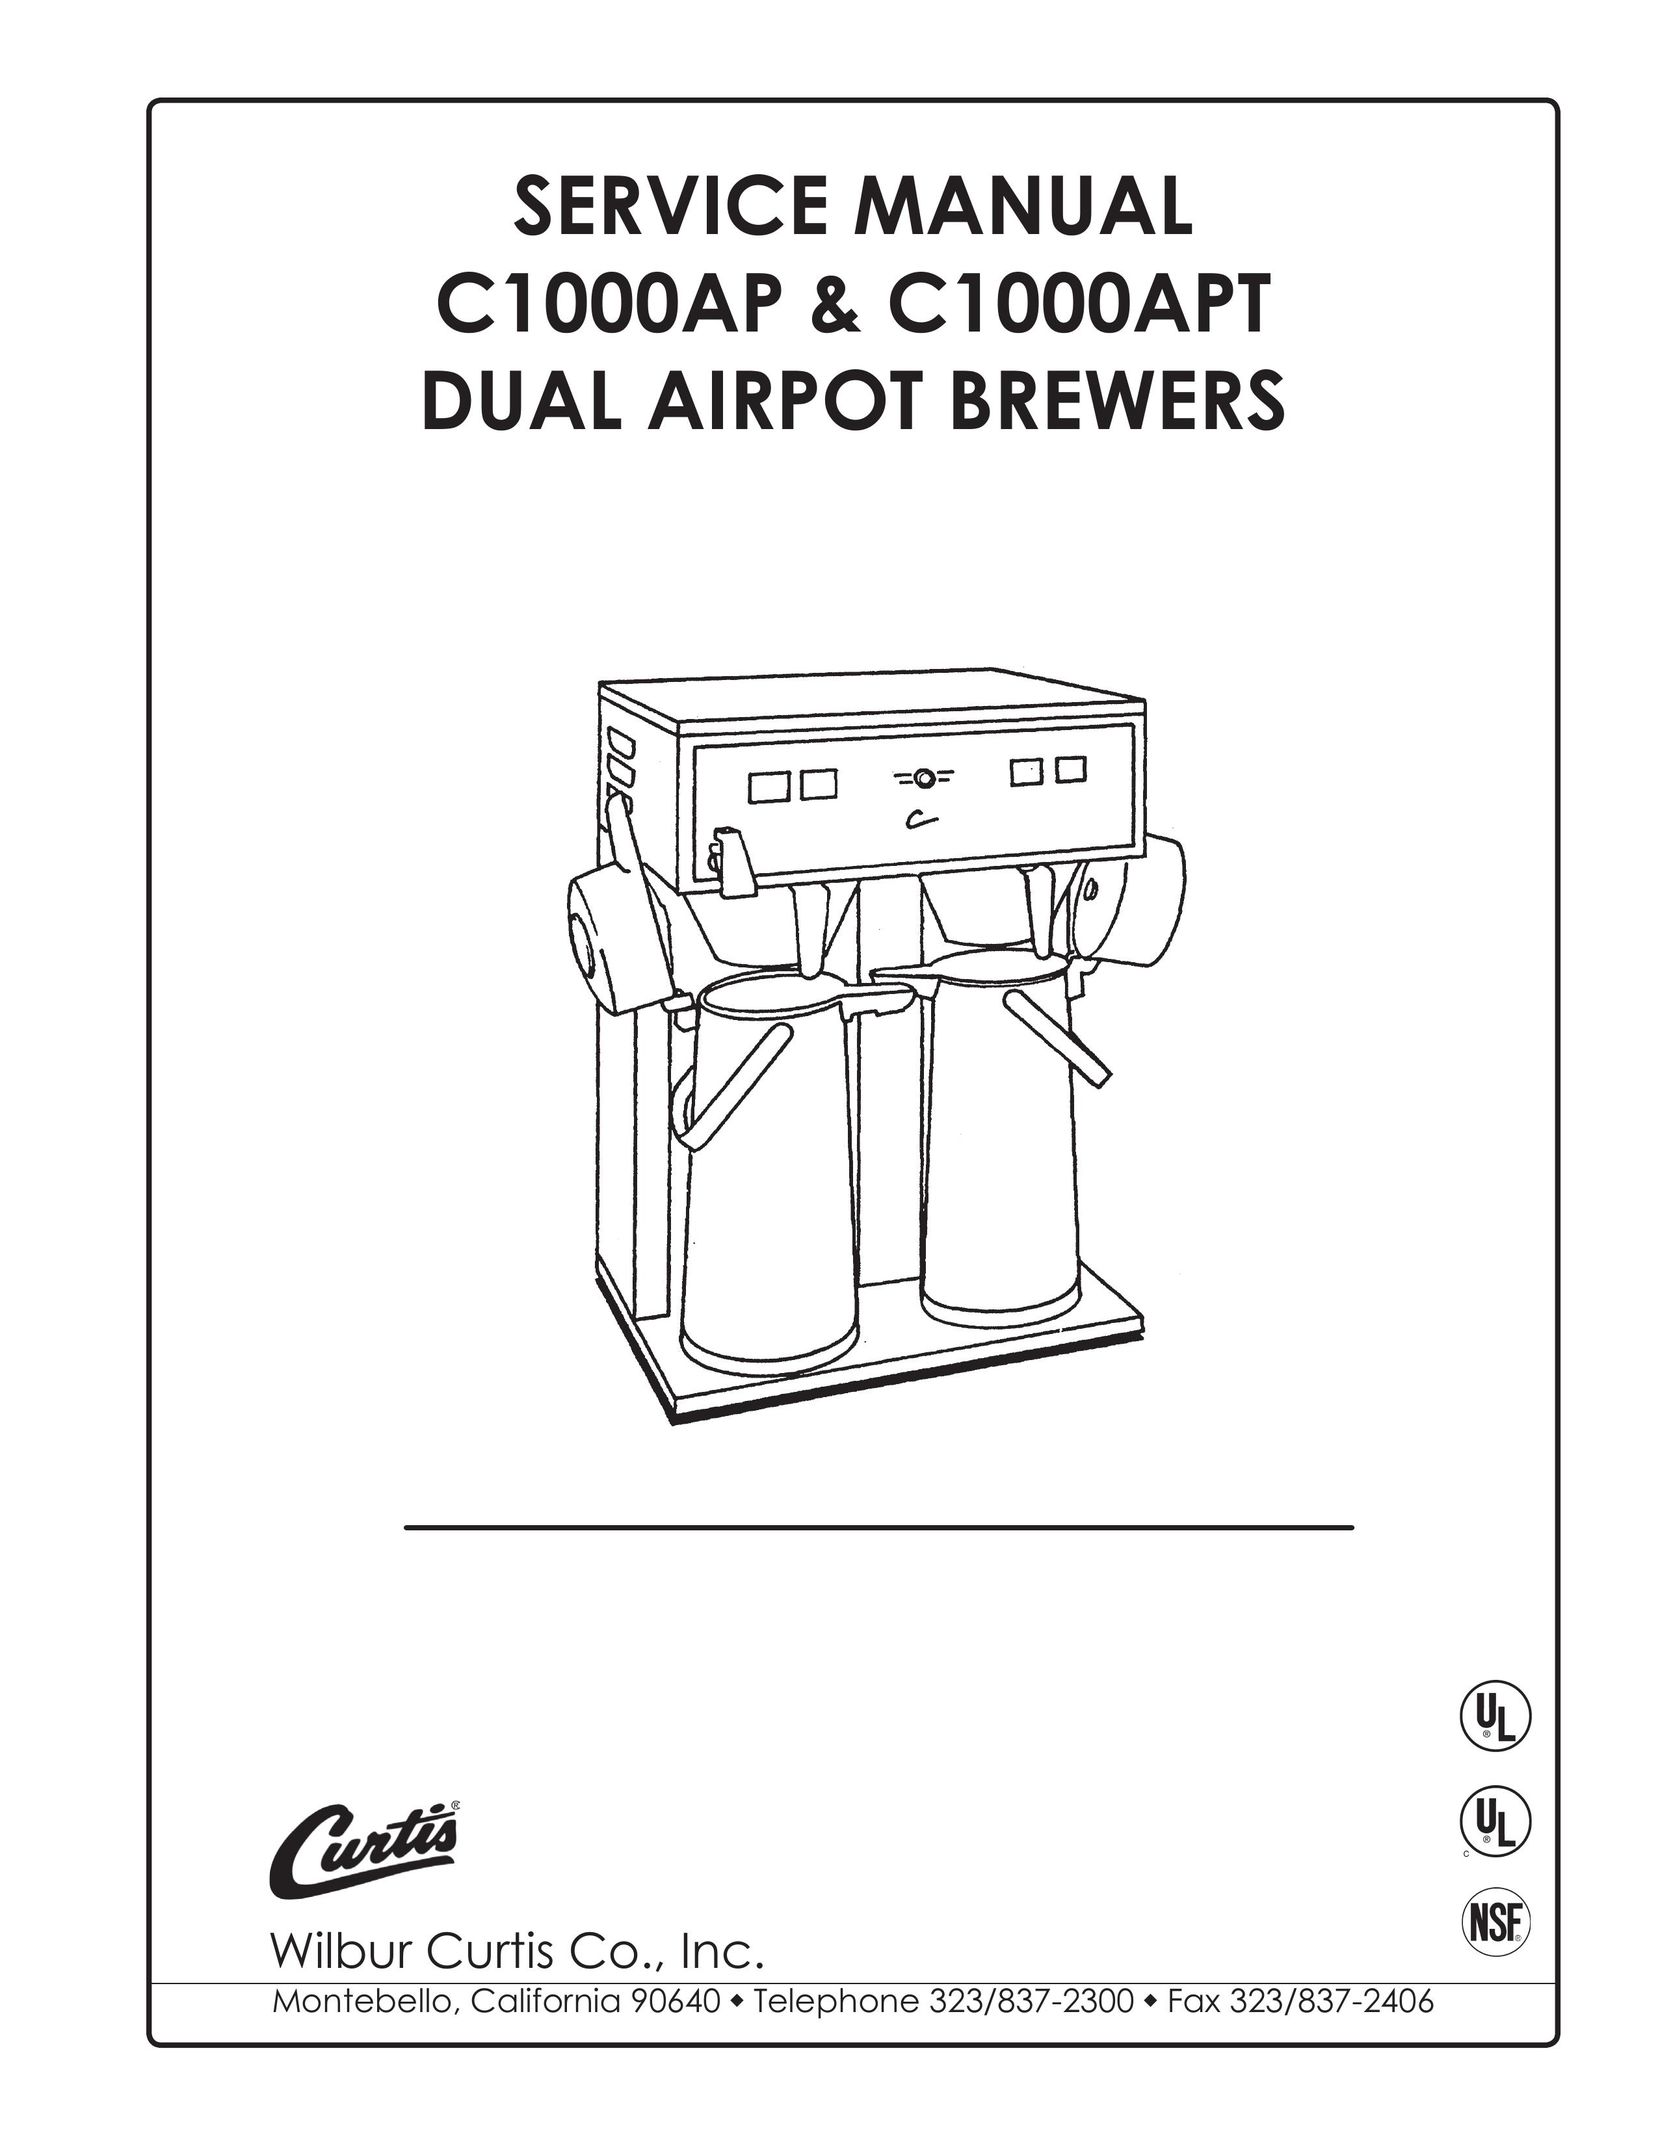 Wibur Curtis Company C1000AP Coffeemaker User Manual